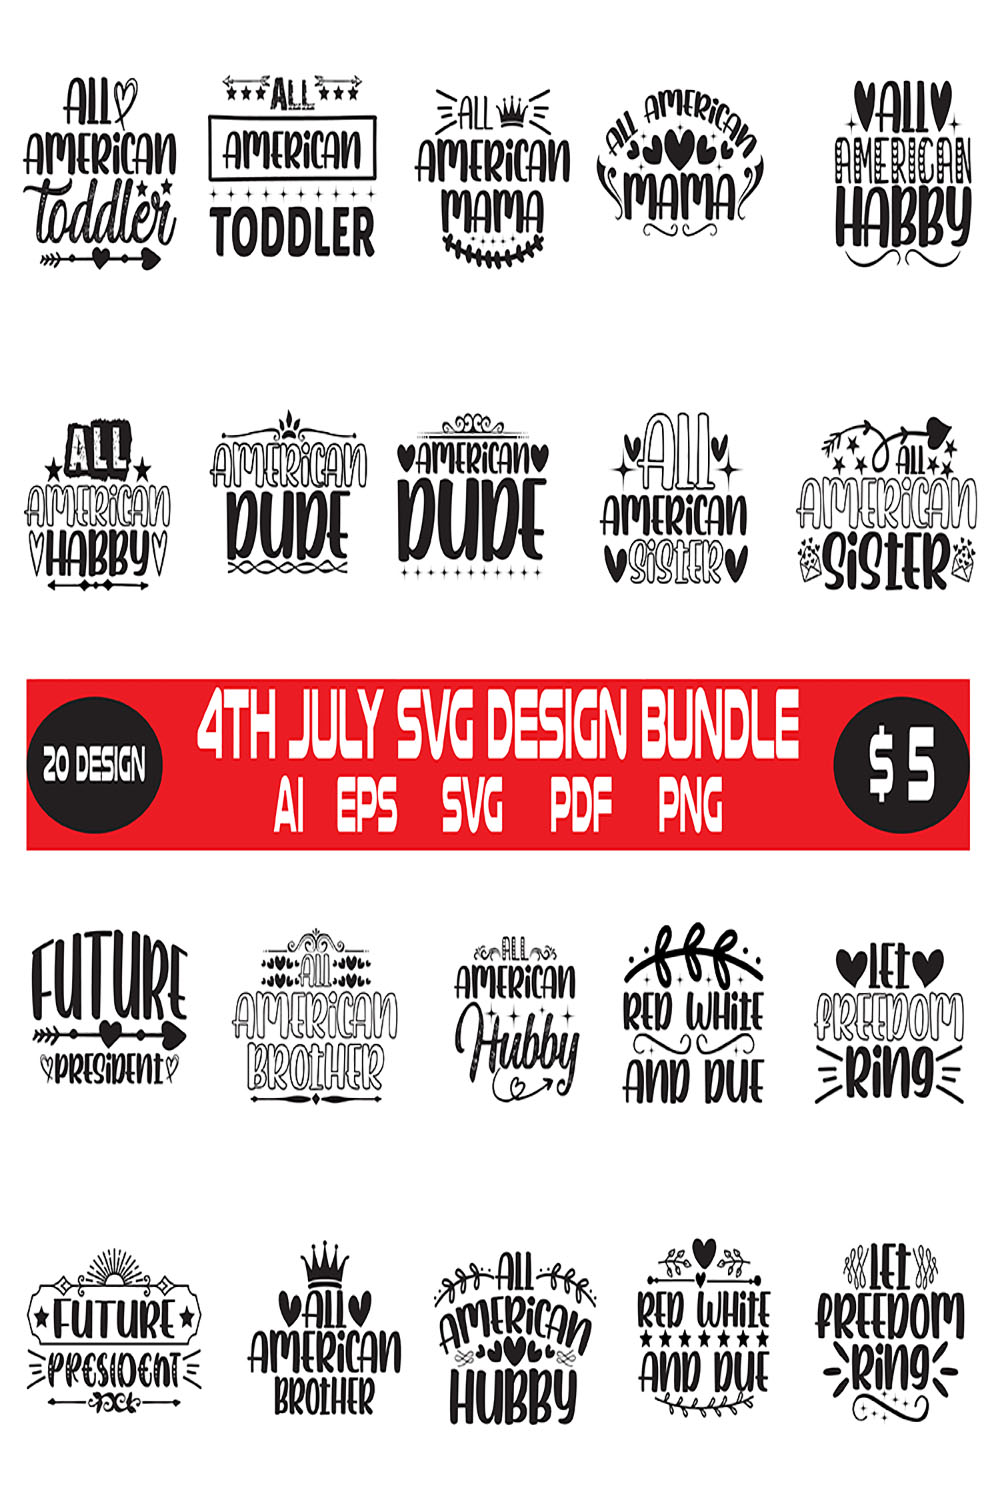 4th july Design Bundle pinterest preview image.